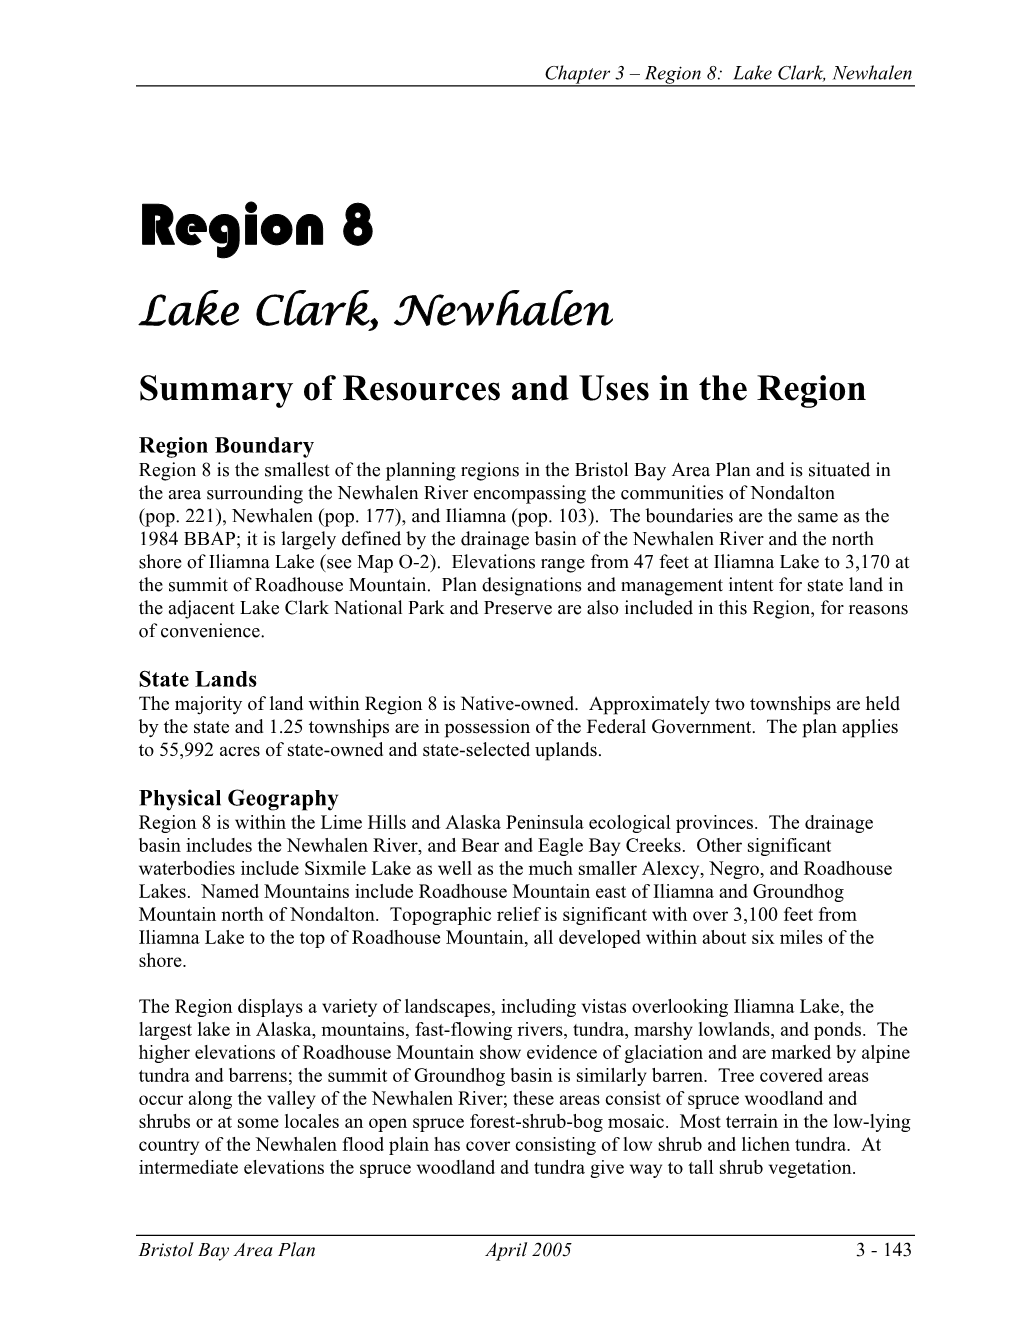 Region 8: Lake Clark, Newhalen